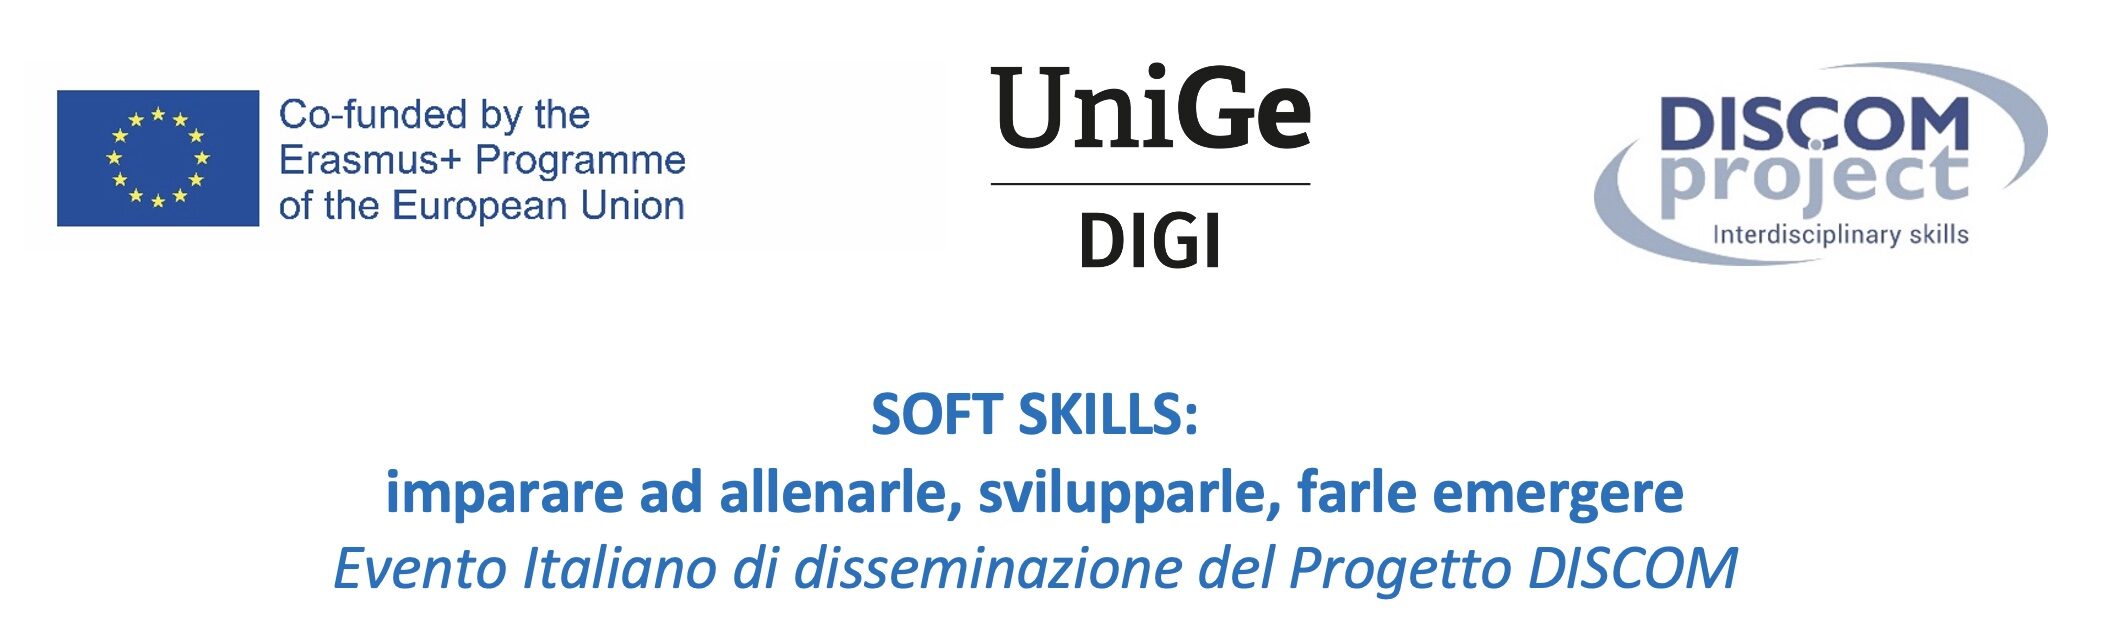 DIGI UniGe Soft Skills DISCOM Project Erasmus+